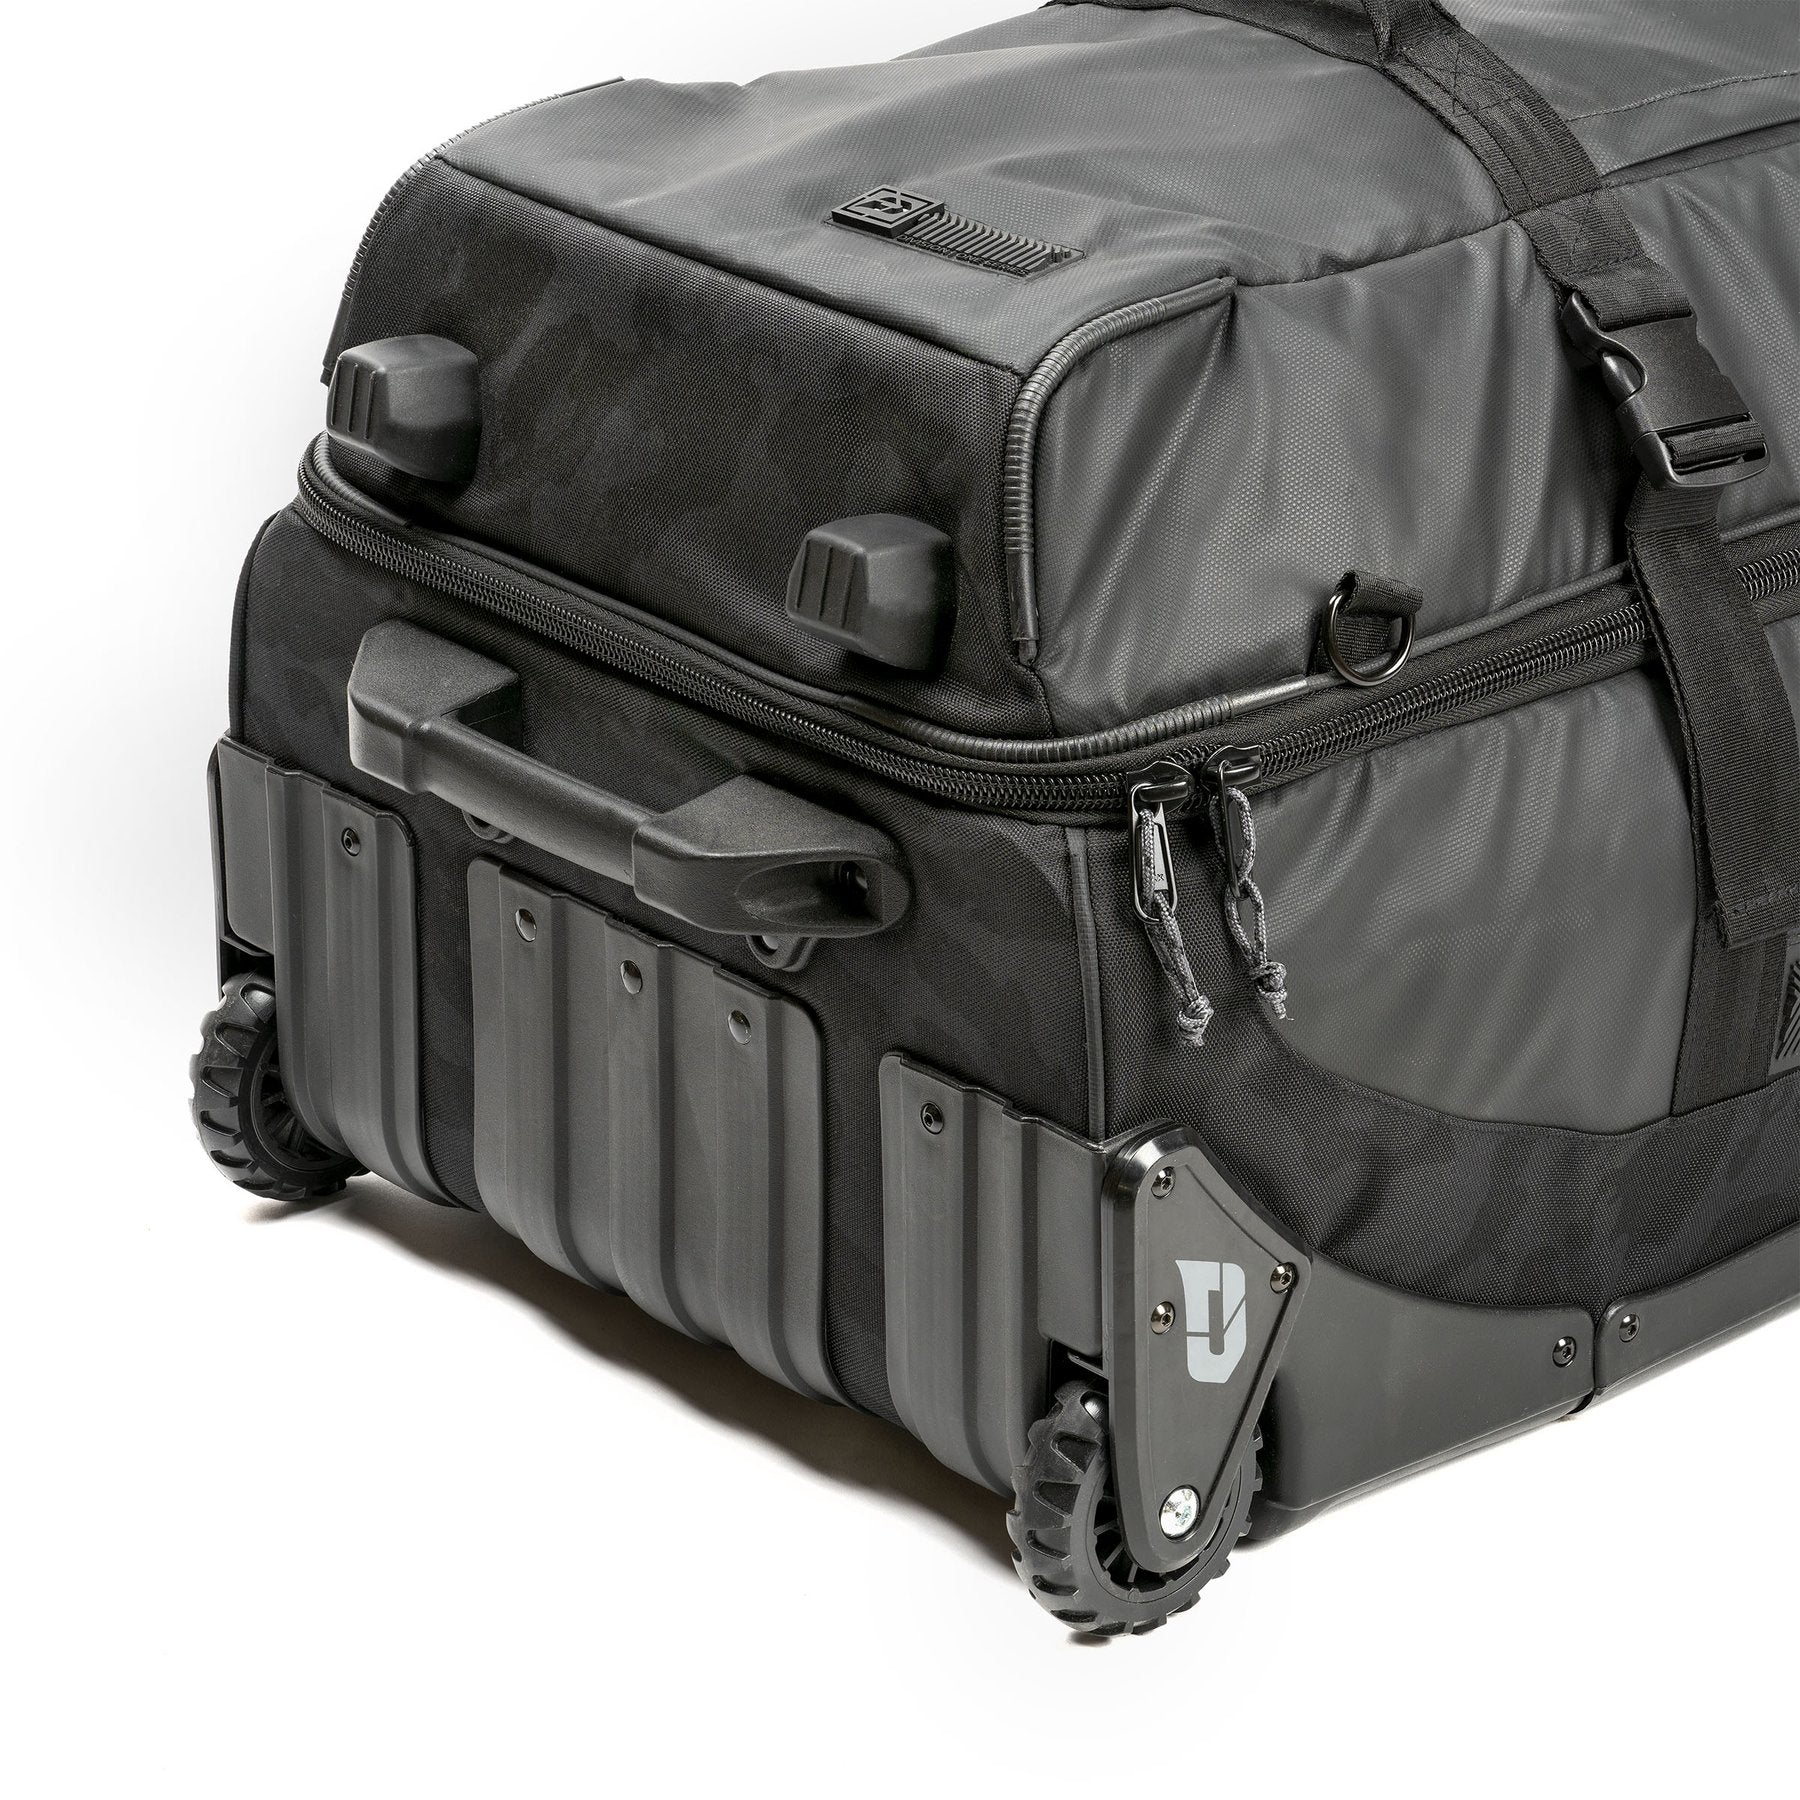 Push Division One Large Roller Gear Bag - Black - Tan Backpack Strap Kit